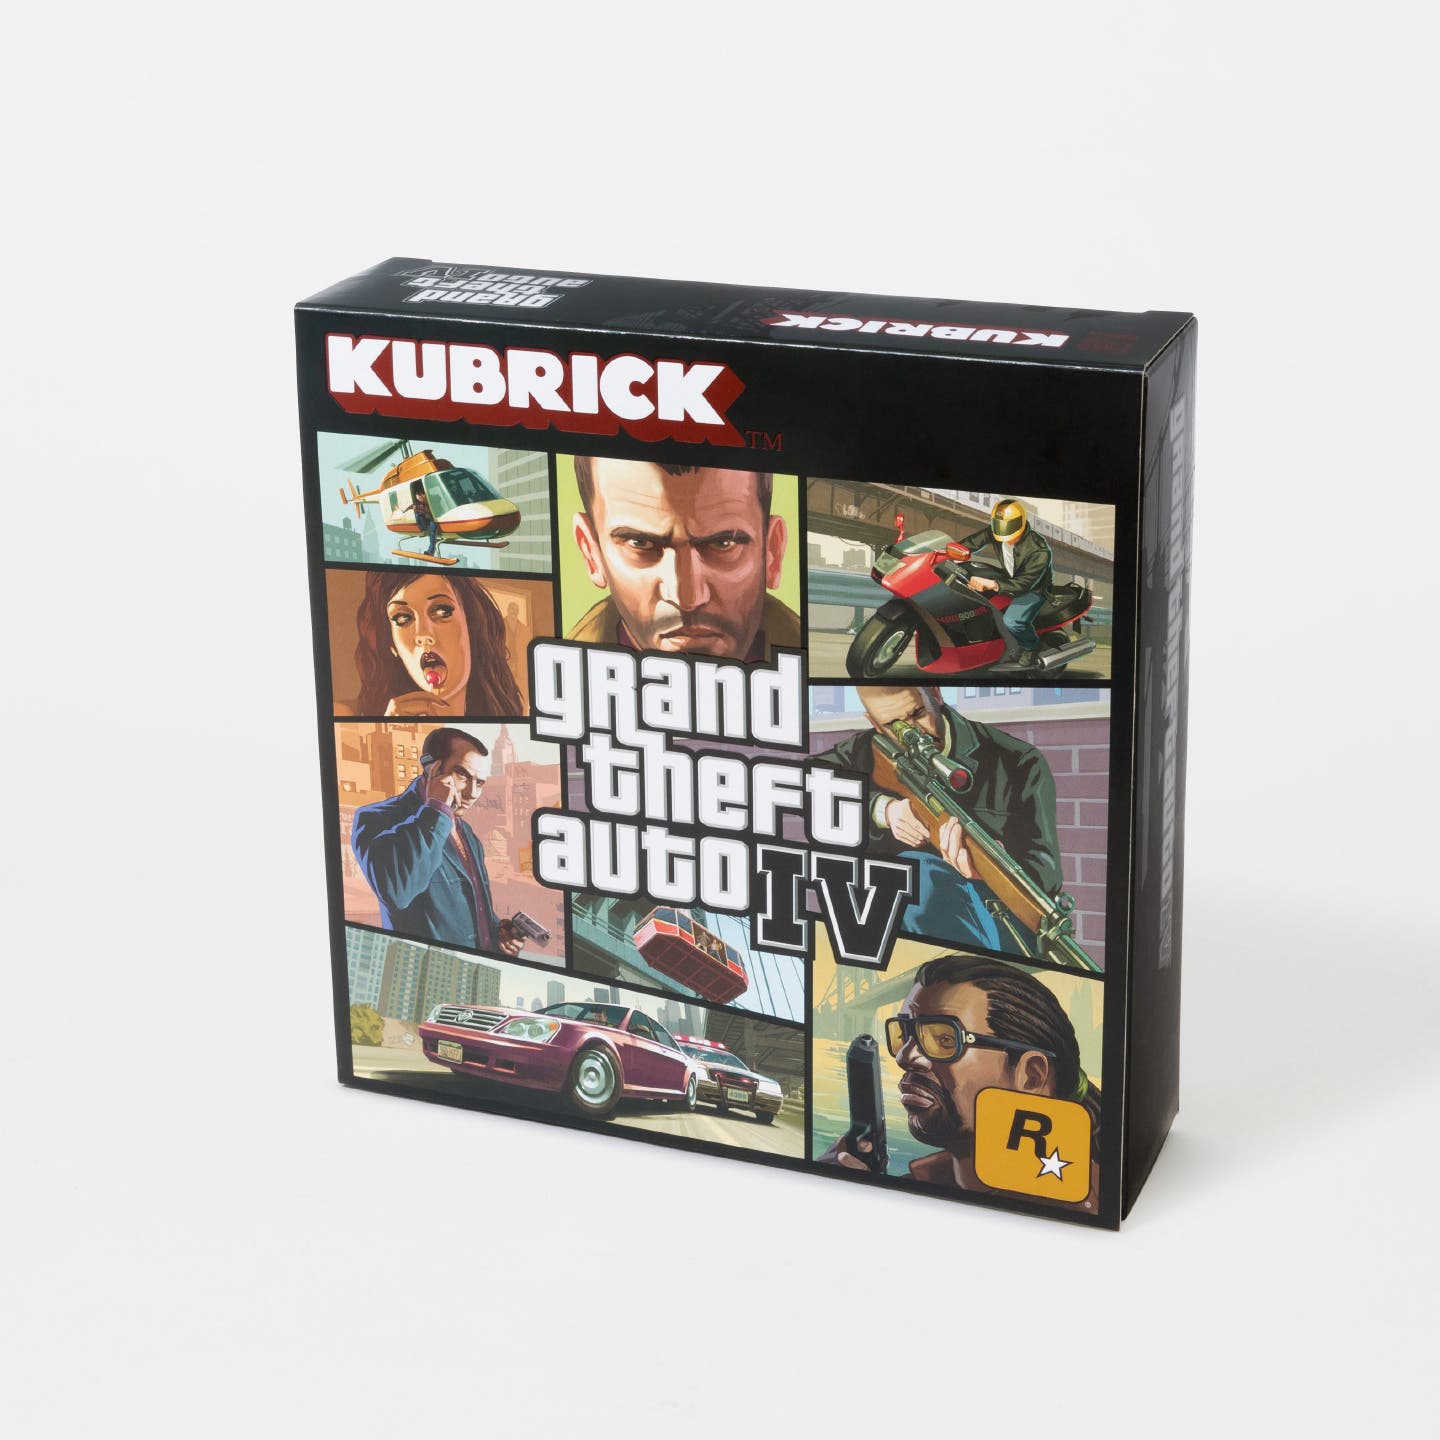 Grand Theft Auto IV Kubrick Set | Rockstar Store